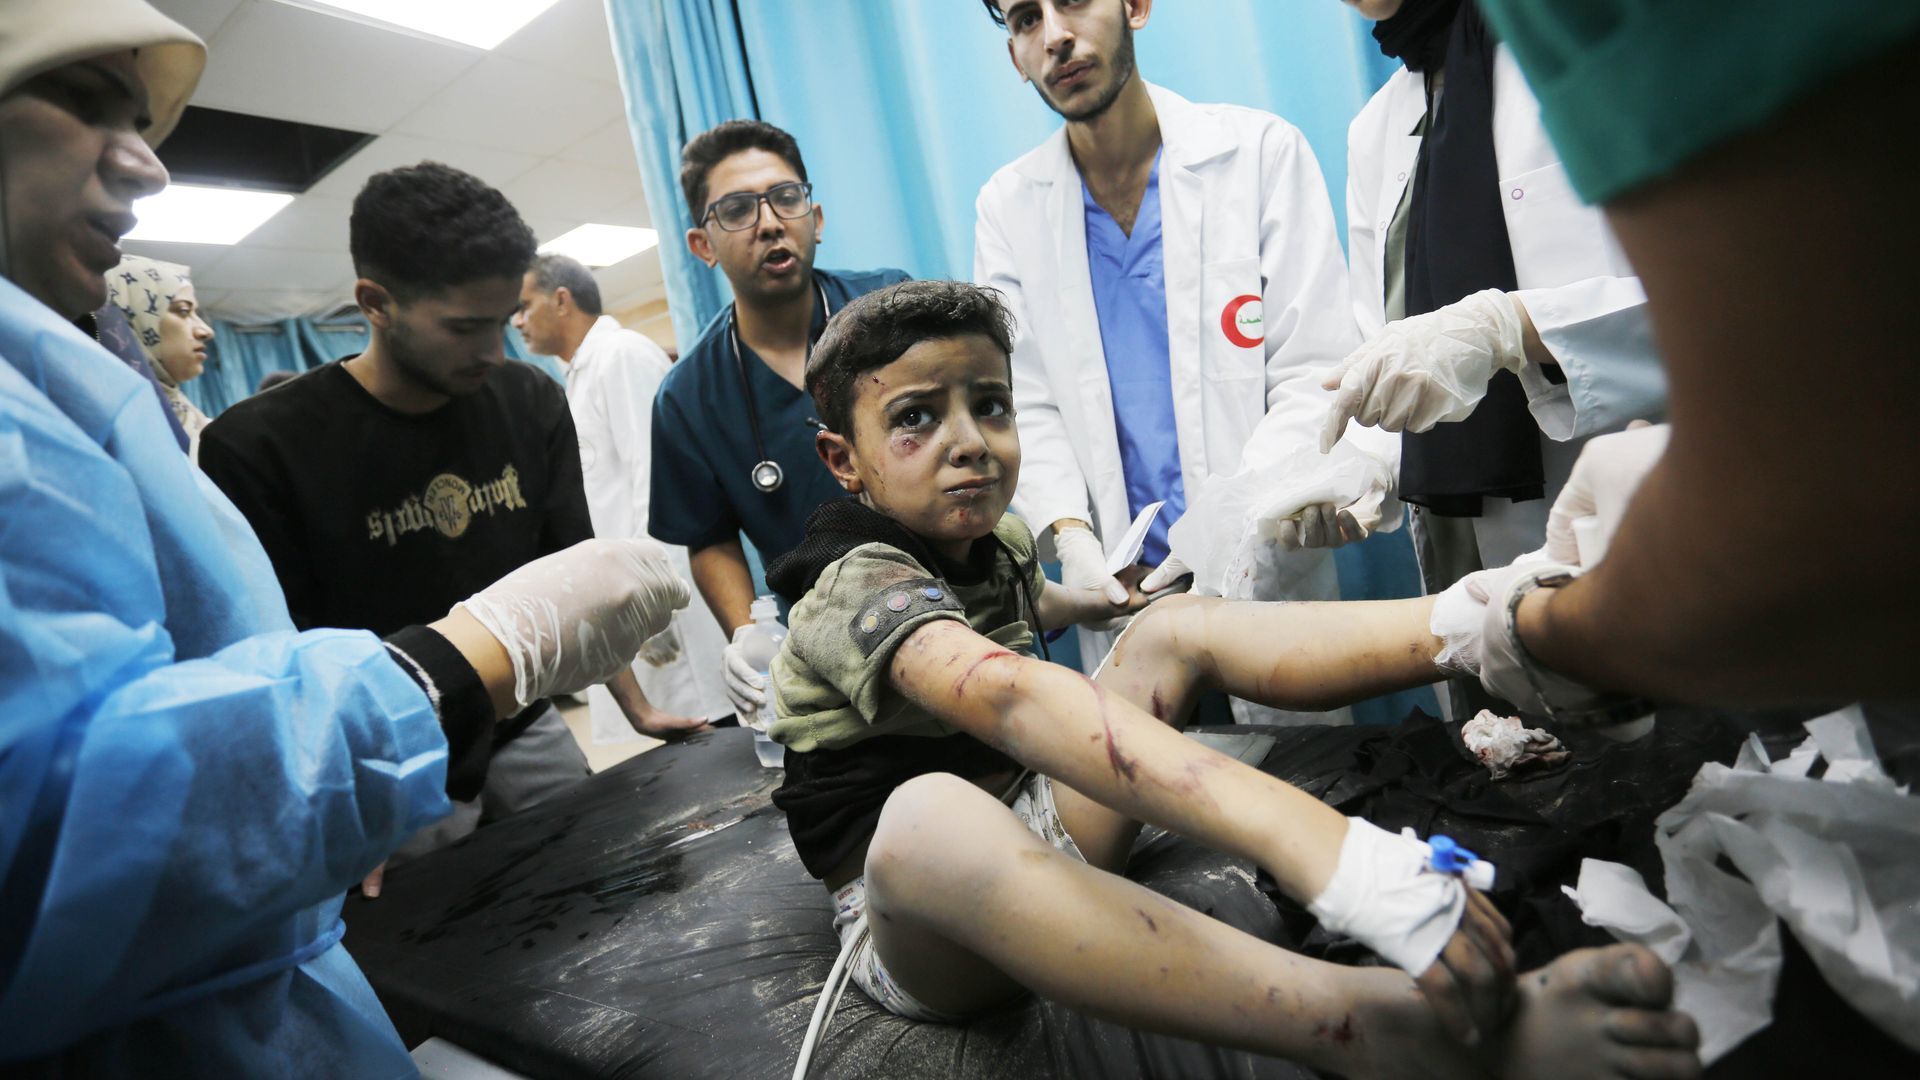 A Palestinian boy injured in Israeli airstrikes receives medical treatment at the Aqsa Hospital in Deir Al-Balah, Gaza, on Oct. 15. Photo: Ashraf Amra/Anadolu via Getty Images